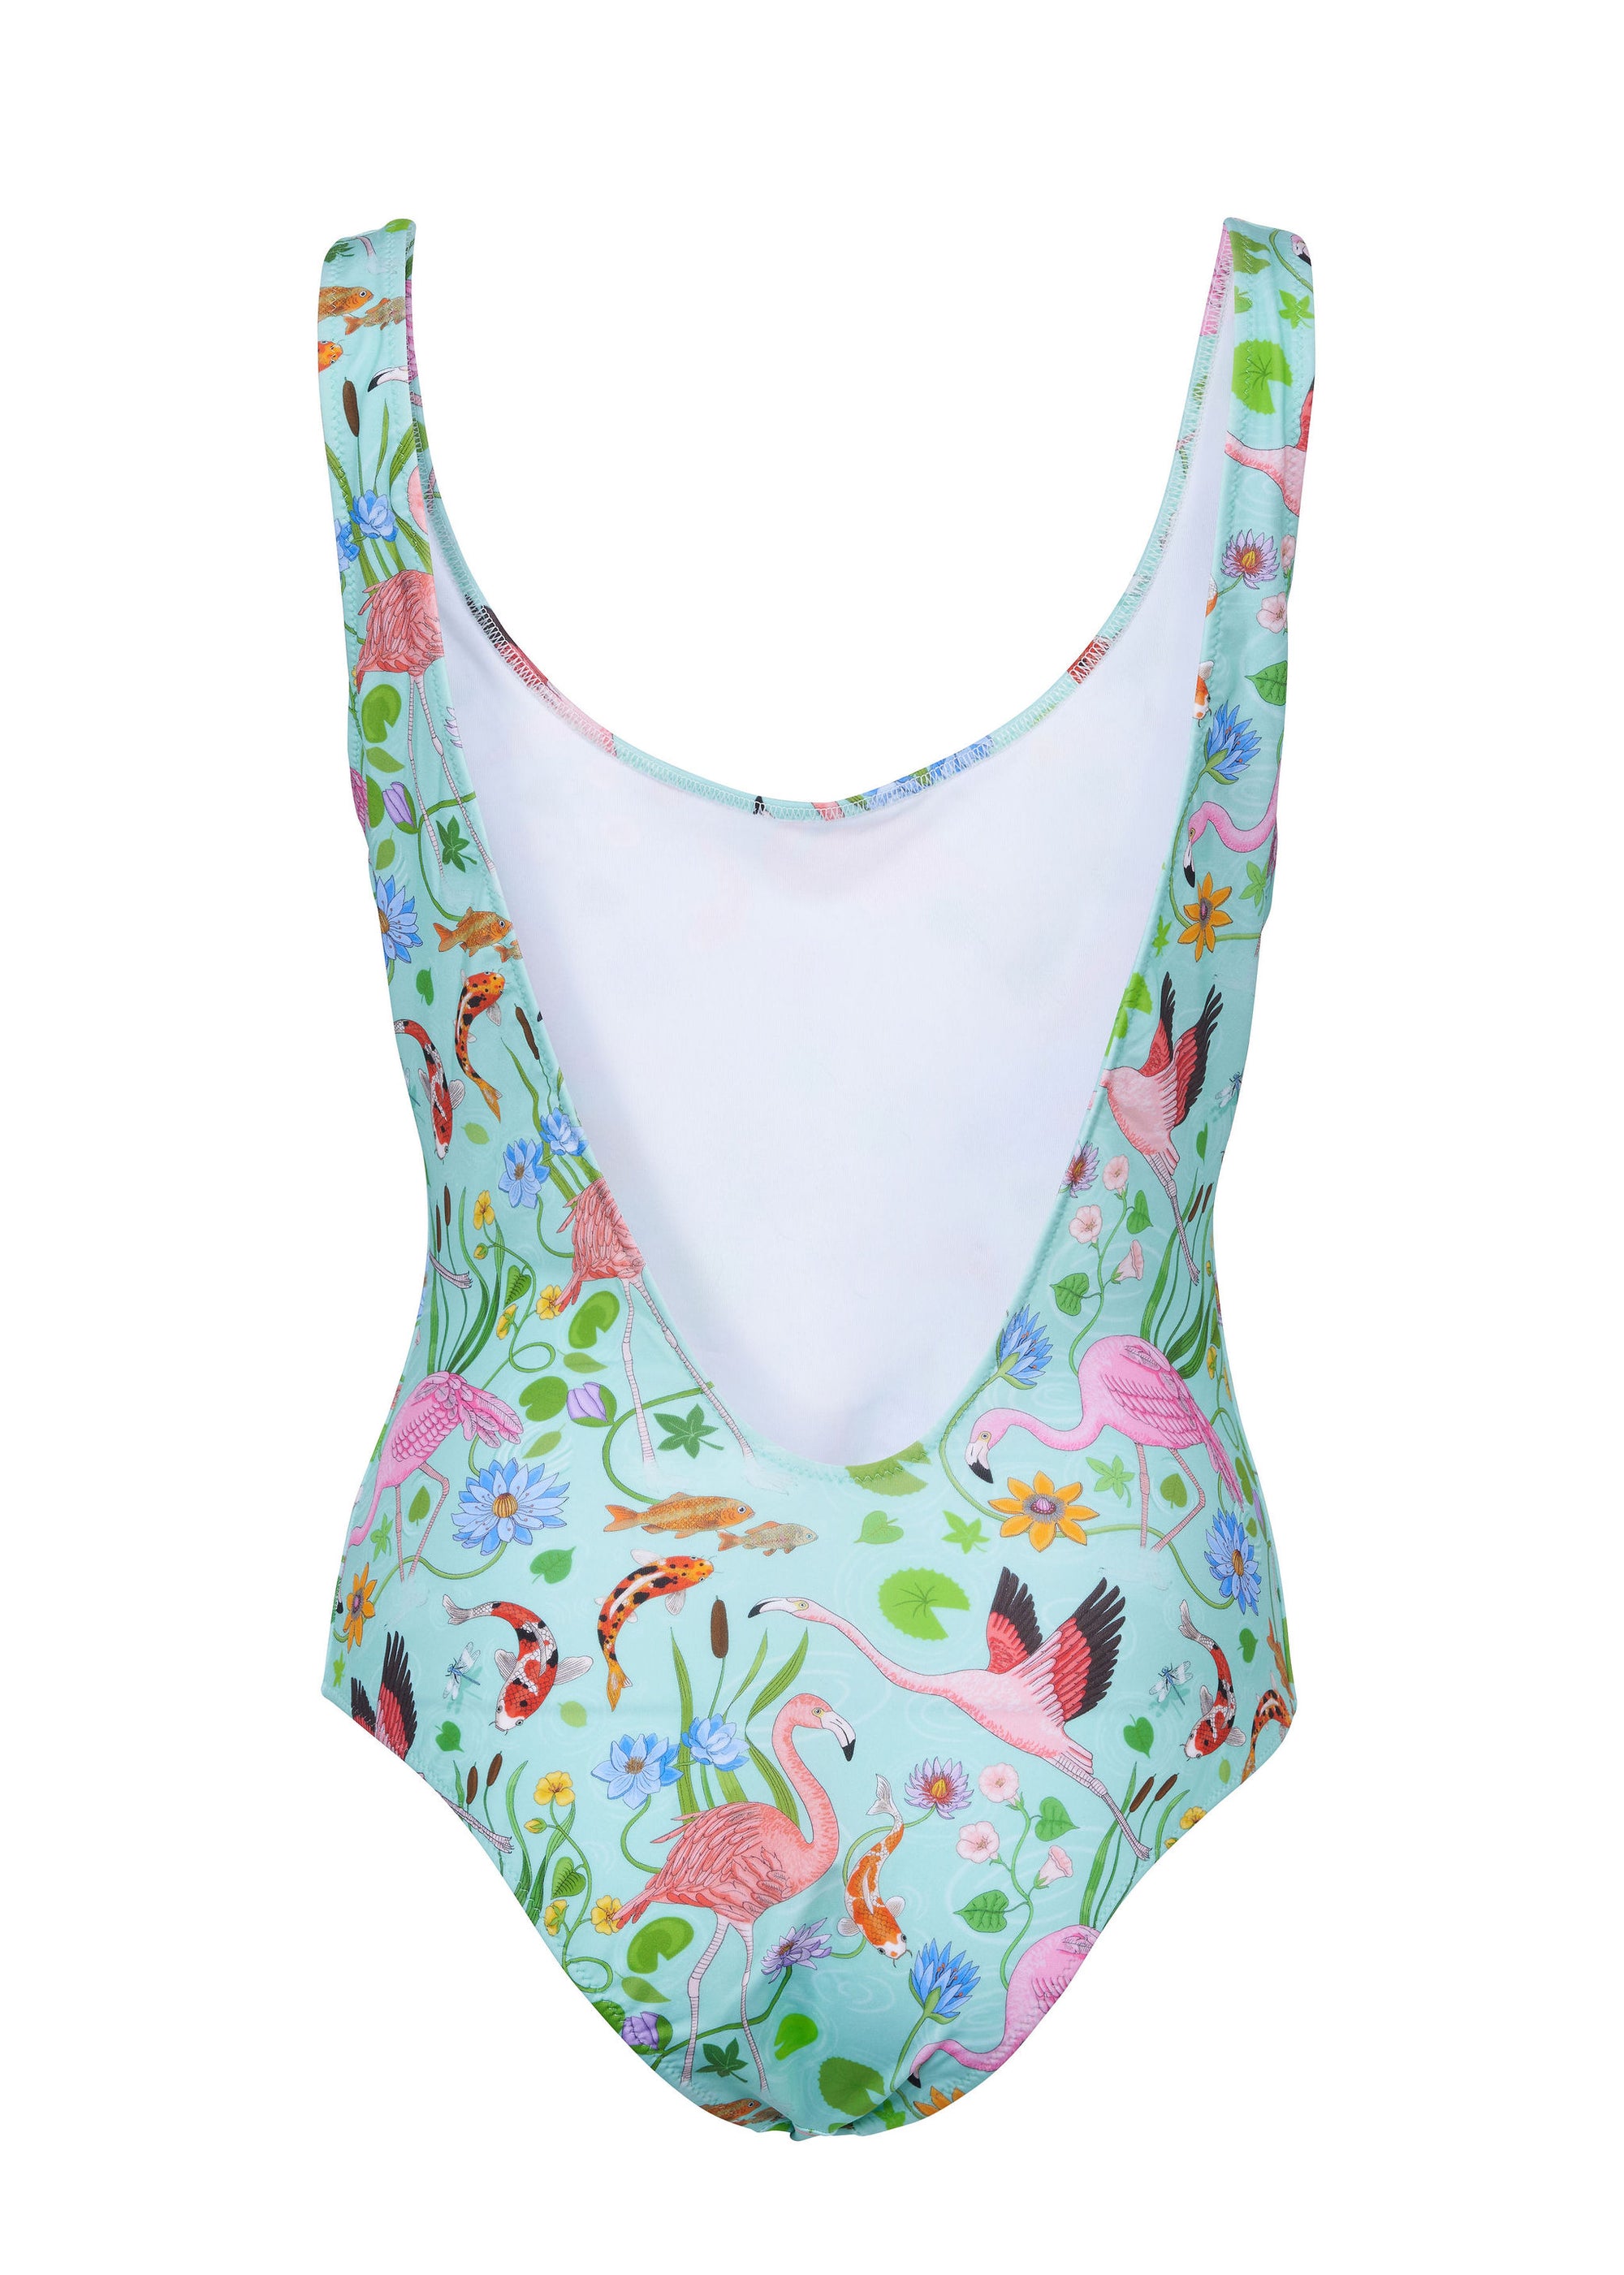 Karen Mabon SS22 Turquoise Flamingo Pond Swim Suit. The print features flamingos, pond plants and Koi fish.